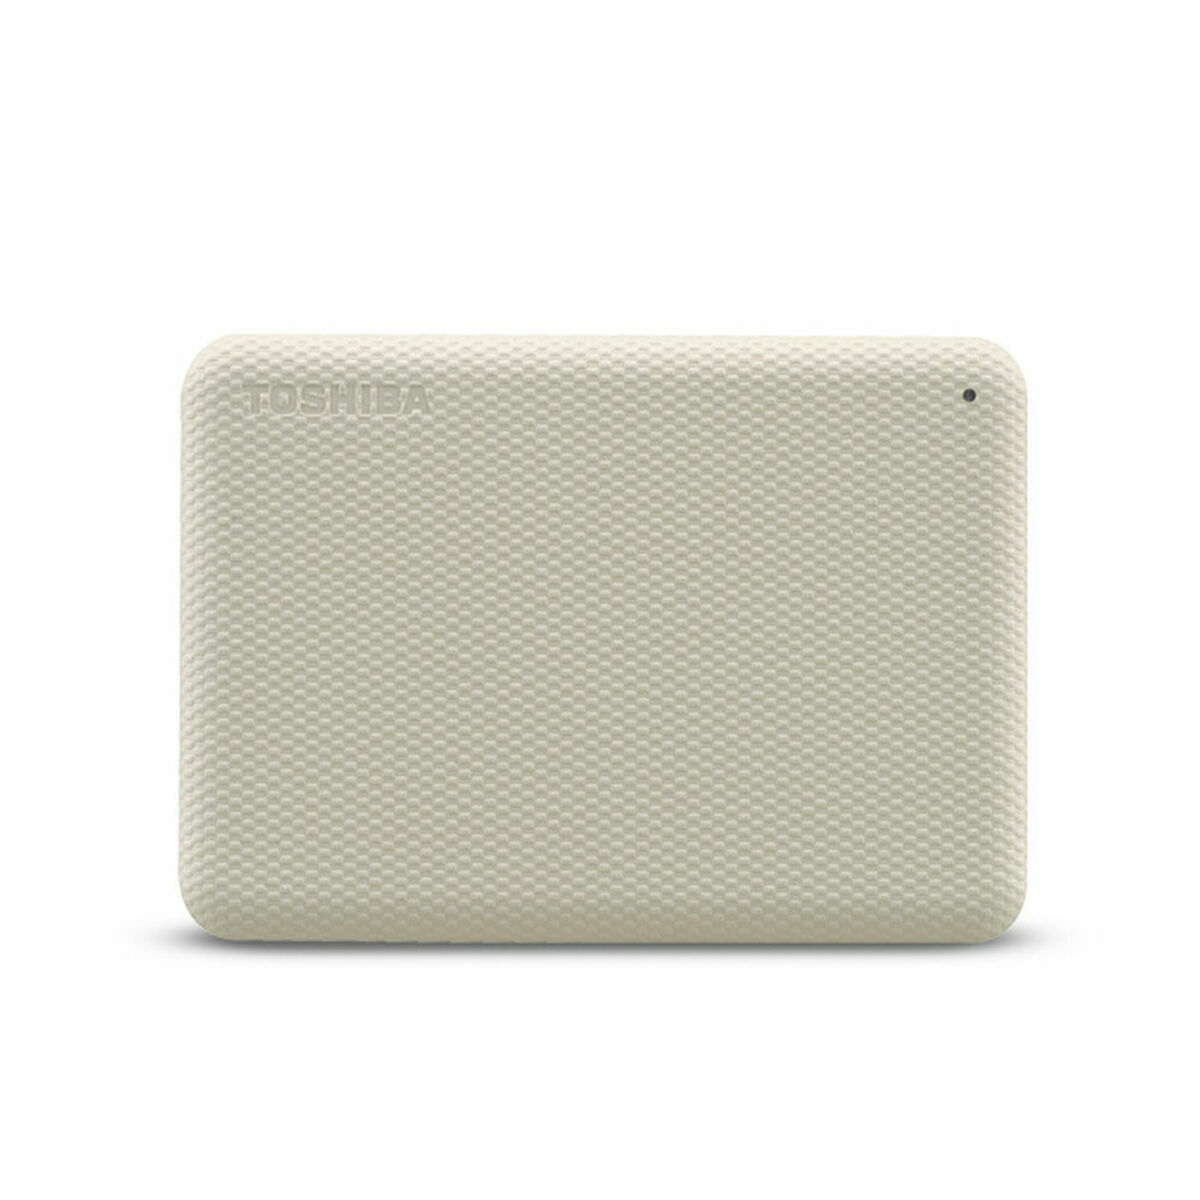 External Hard Drive Toshiba HDTCA20EW3AA         White 2 TB 2,5"